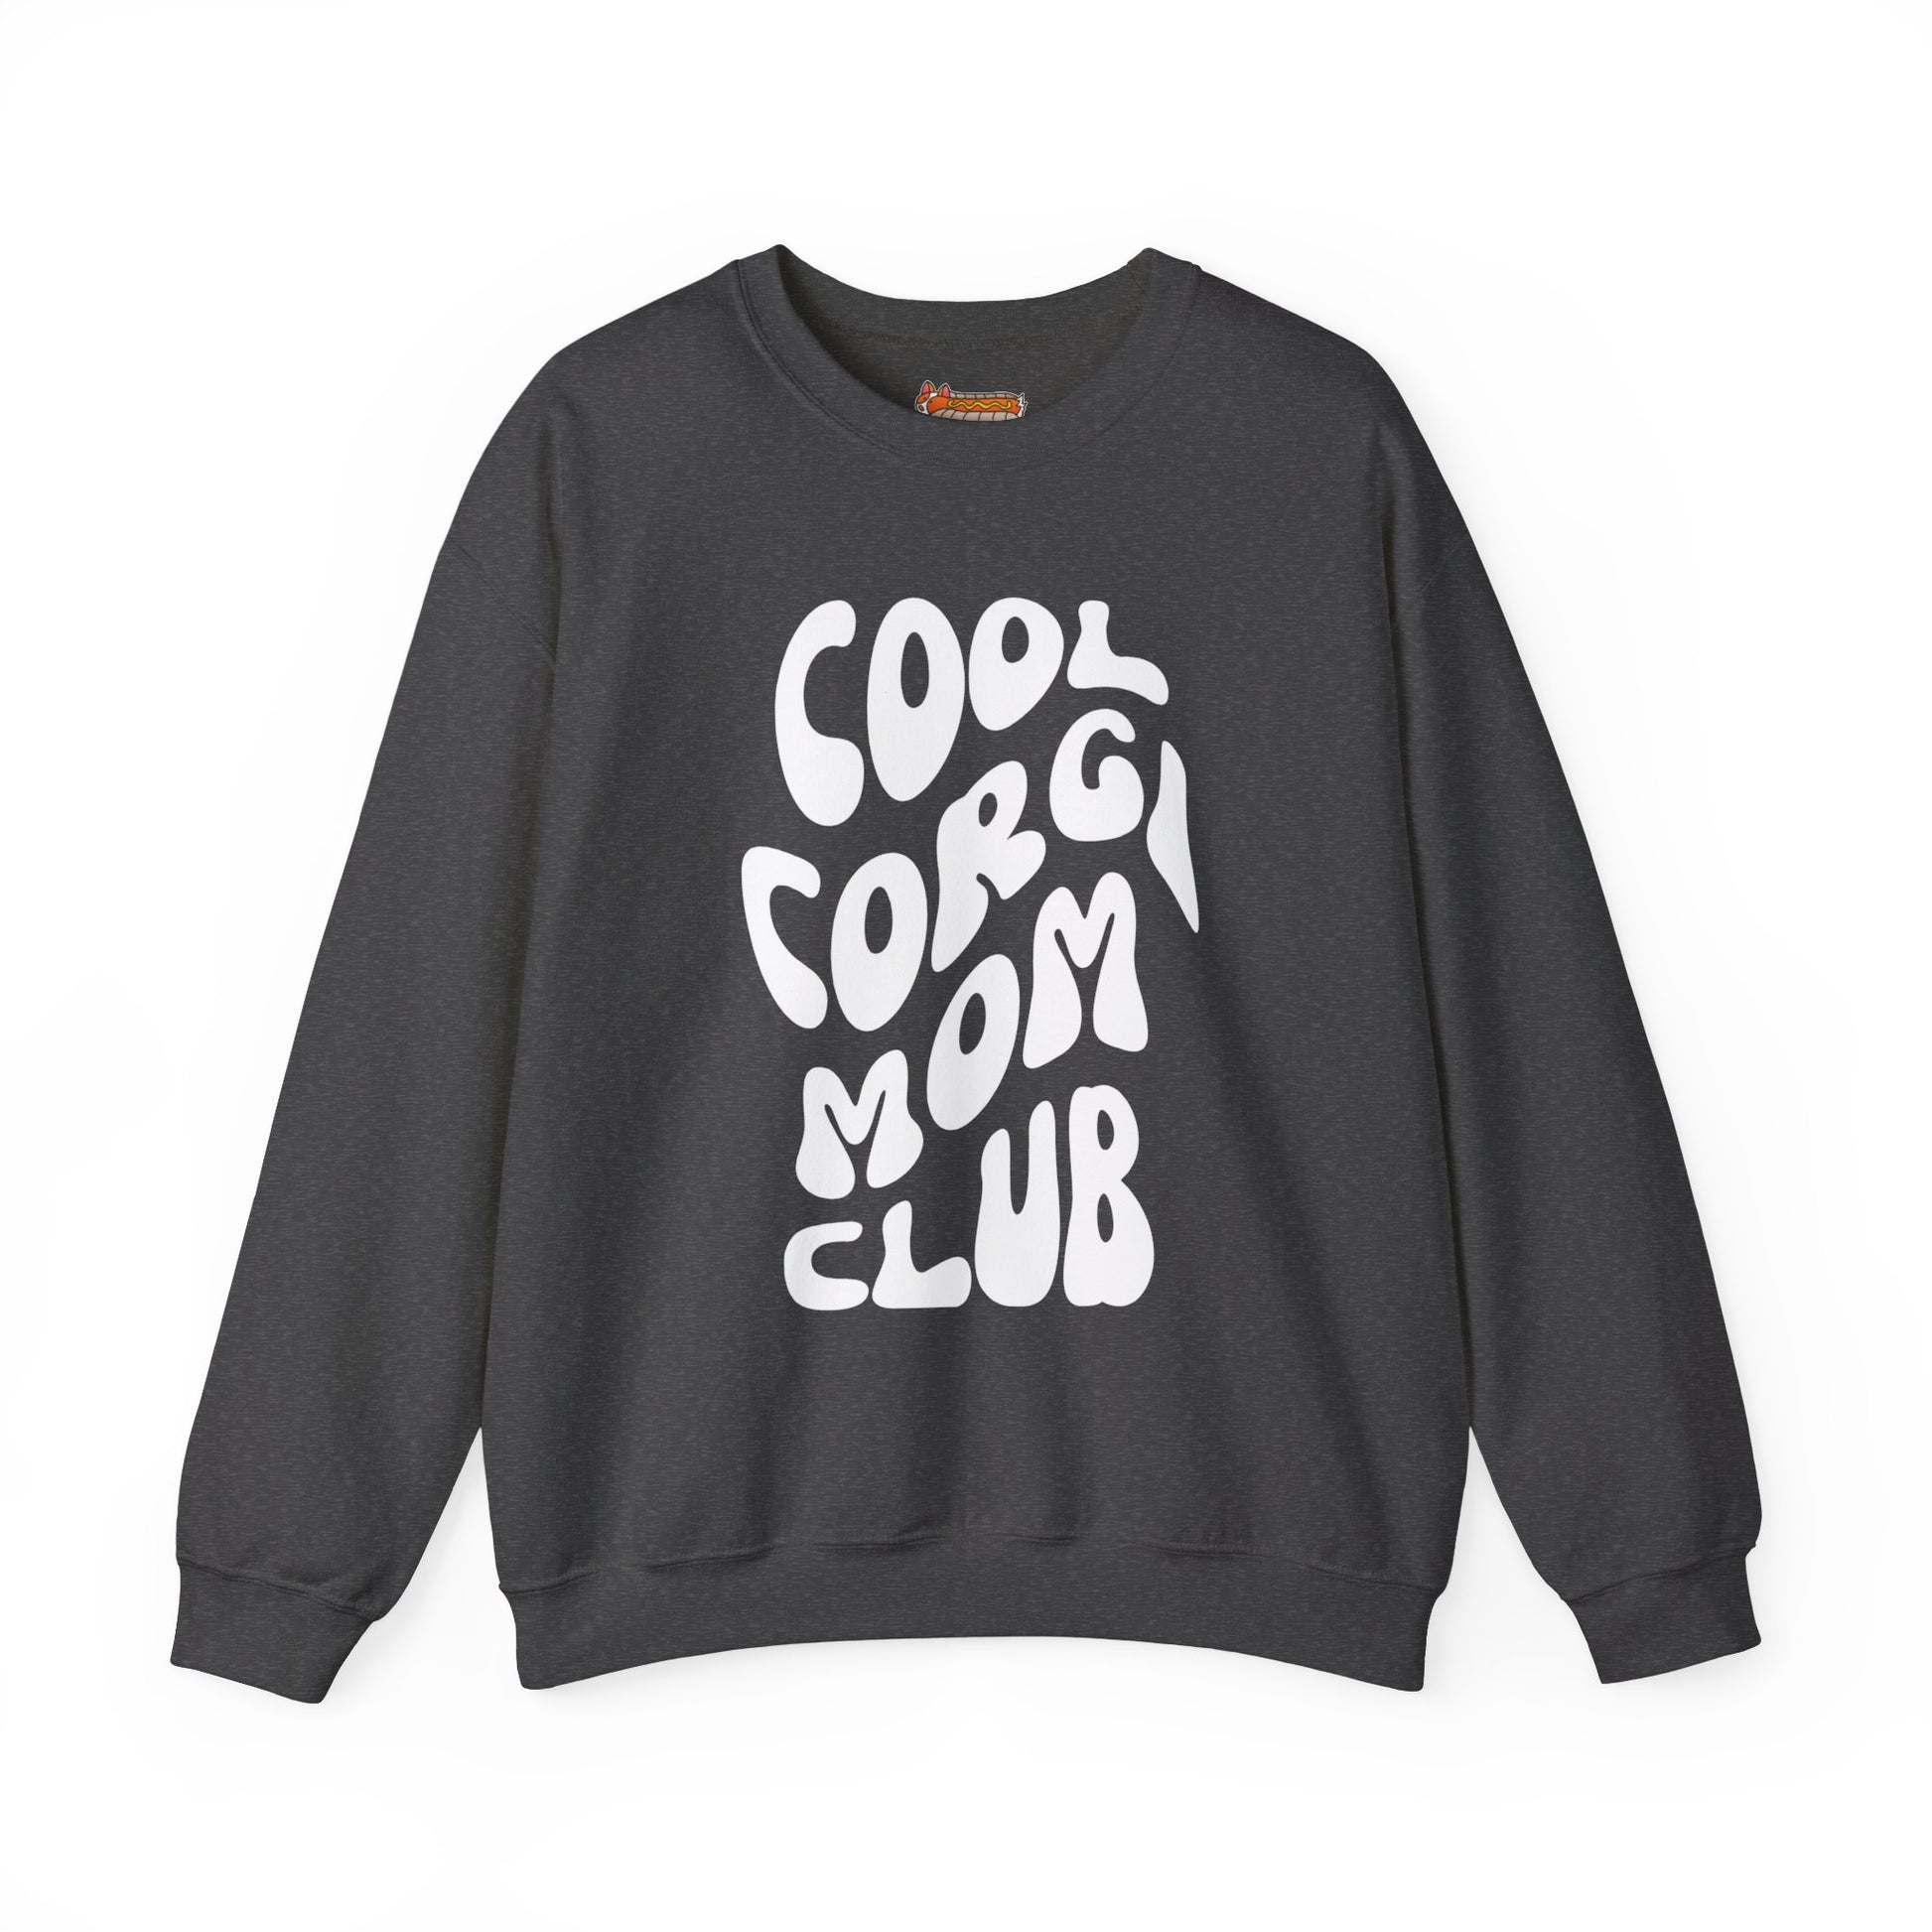 dark gray corgi sweatshirt cool mom club trendy retro text dog lover gift for her women